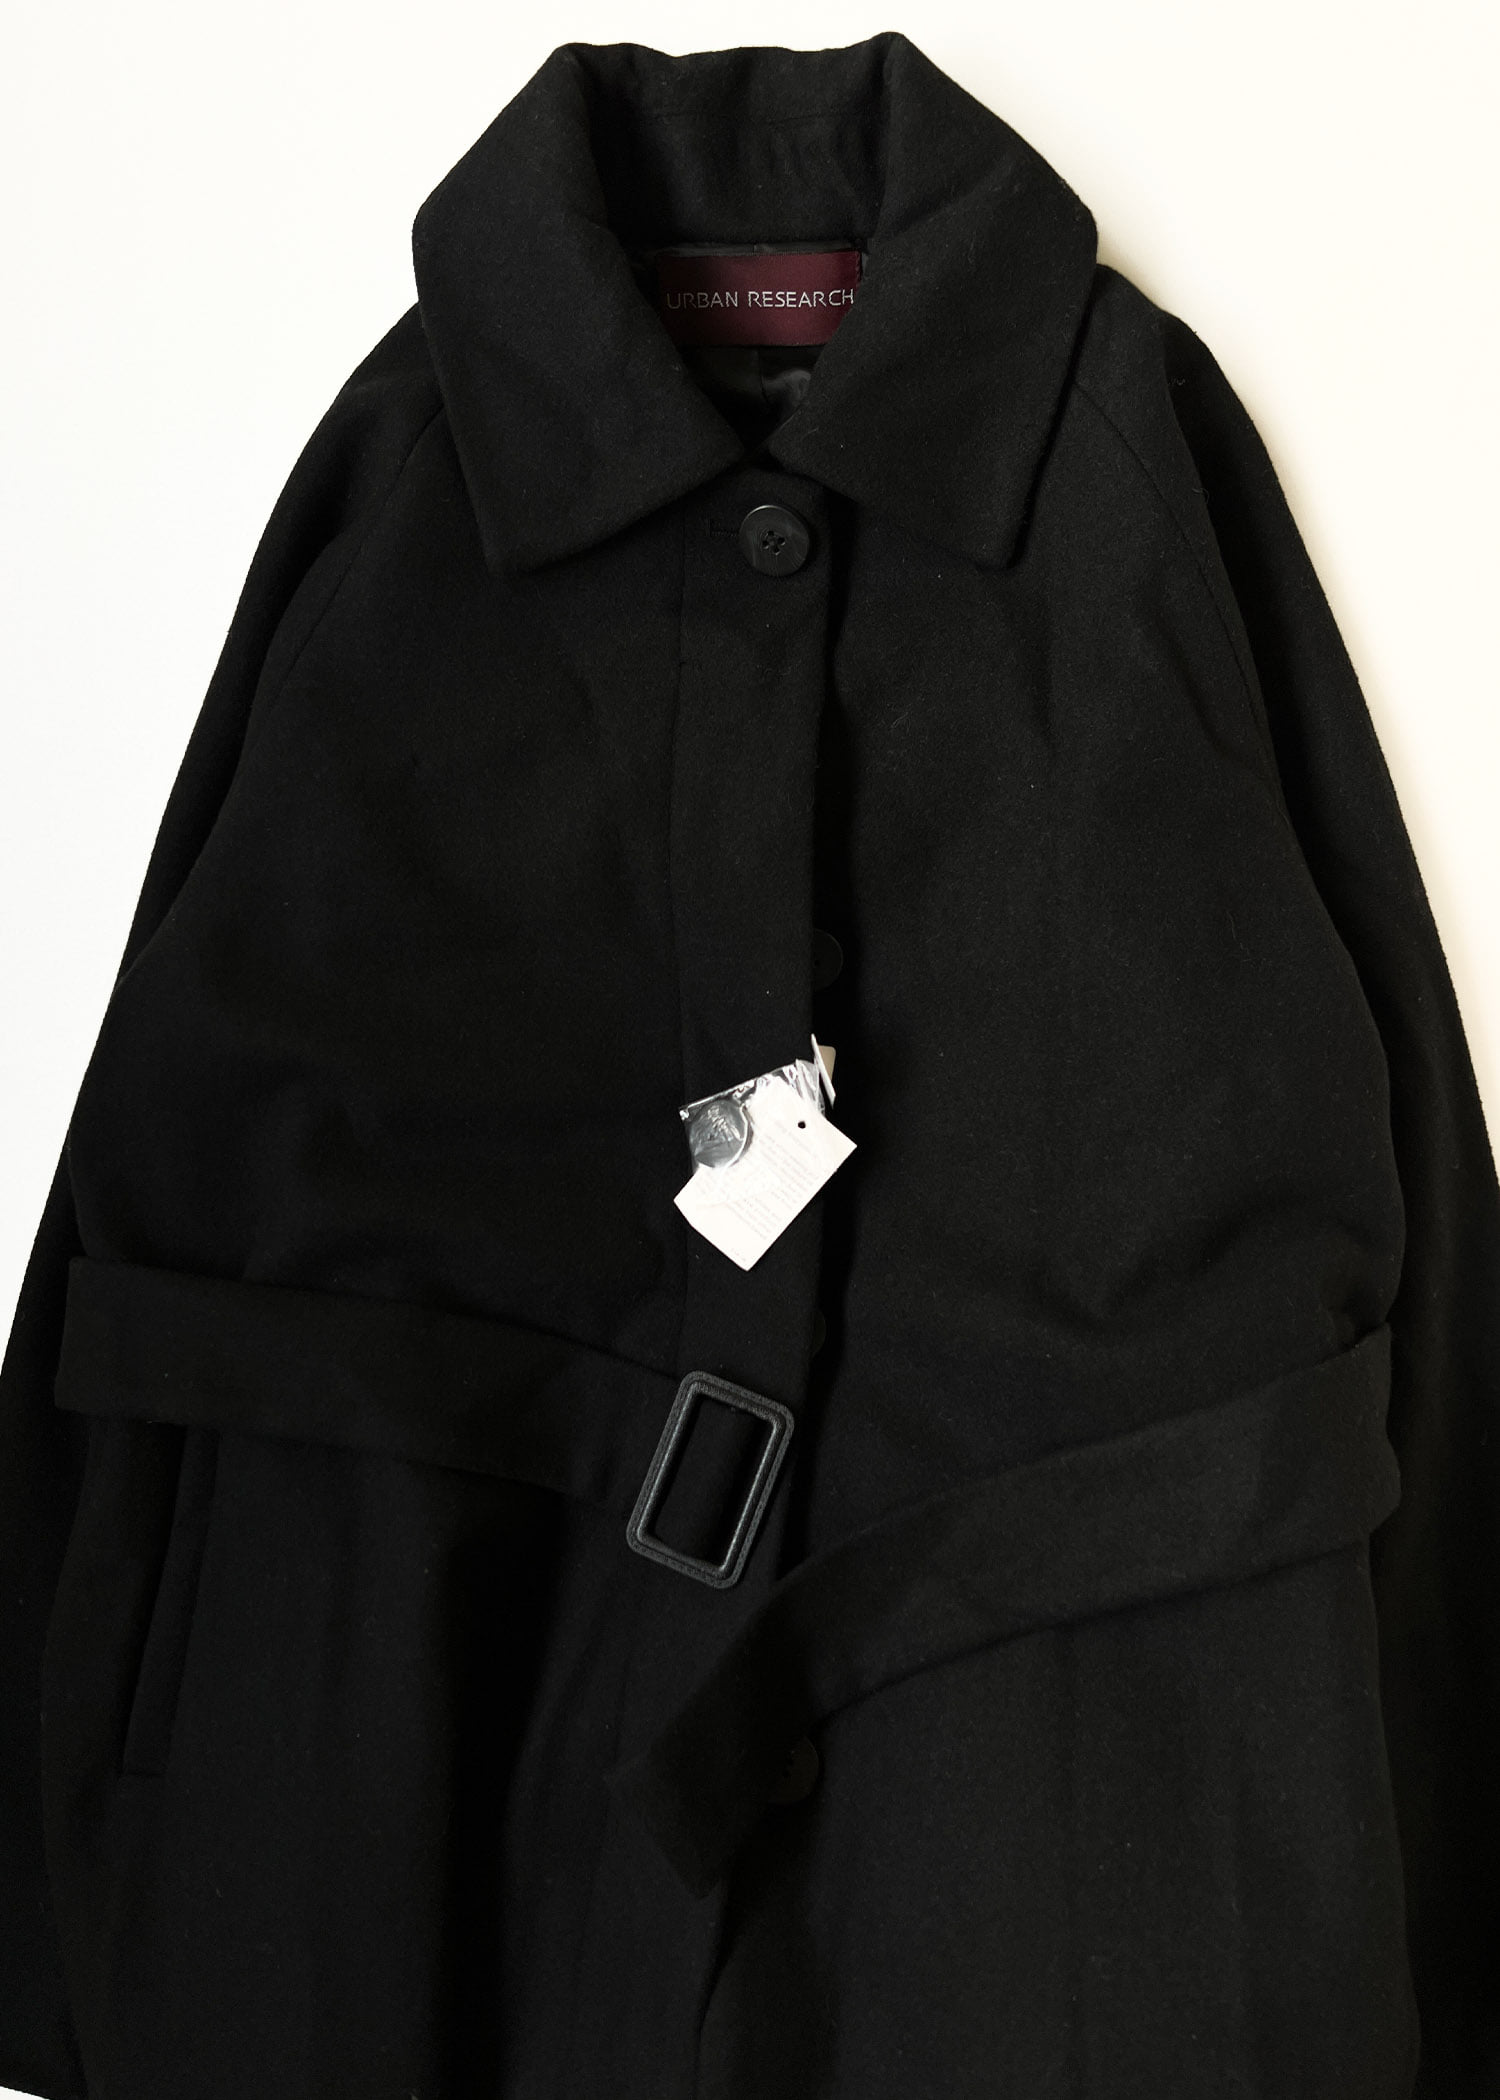 URBAN RESERCH belted coat (unused)